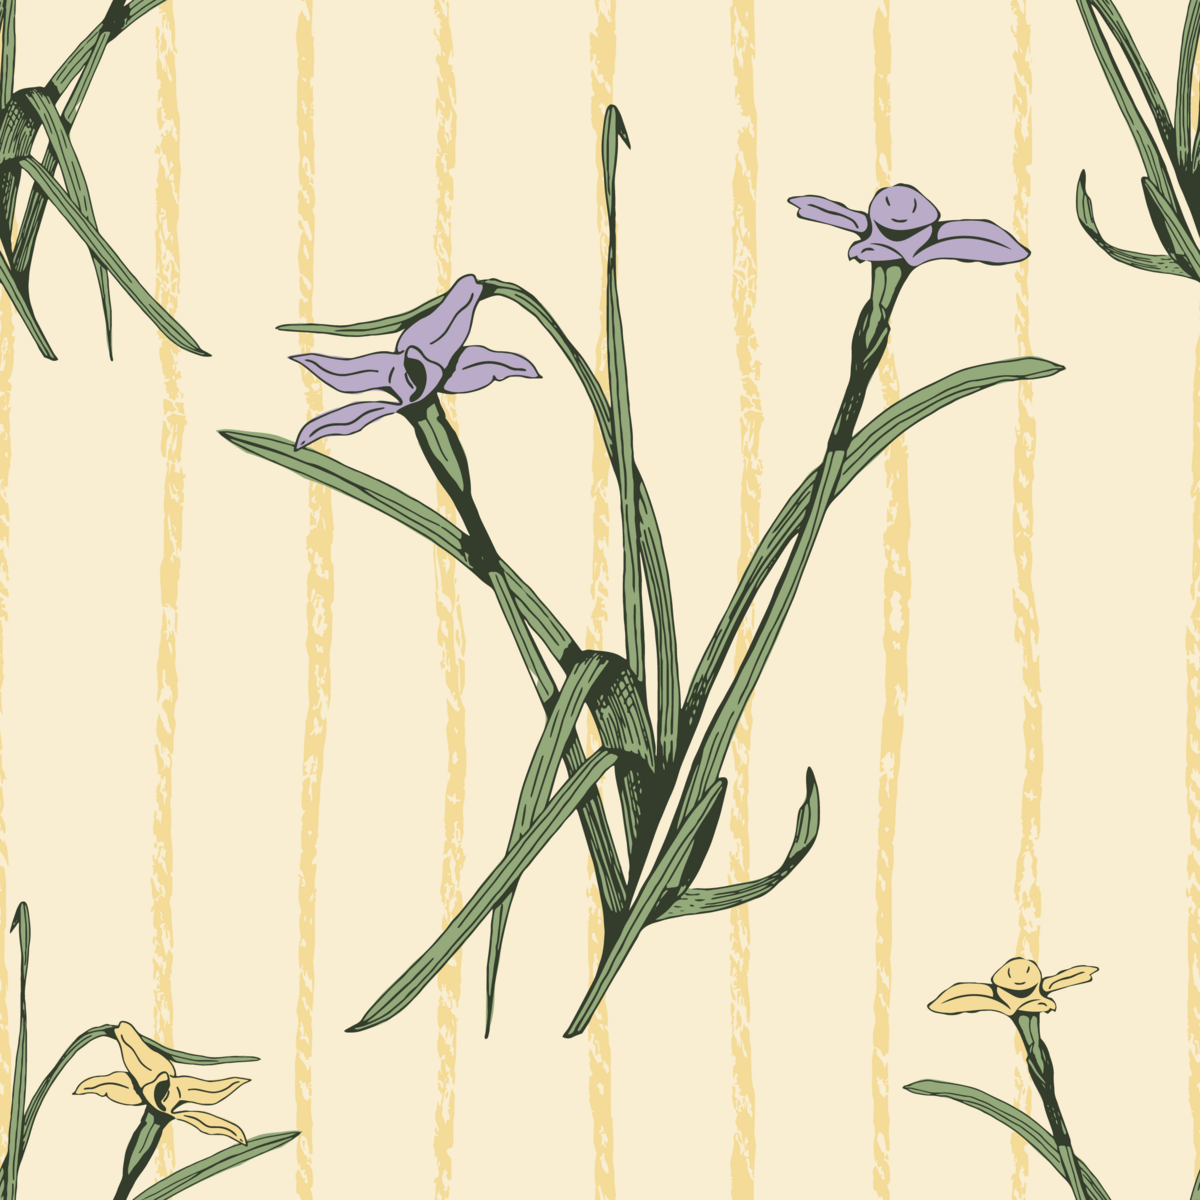 Irises on stripes